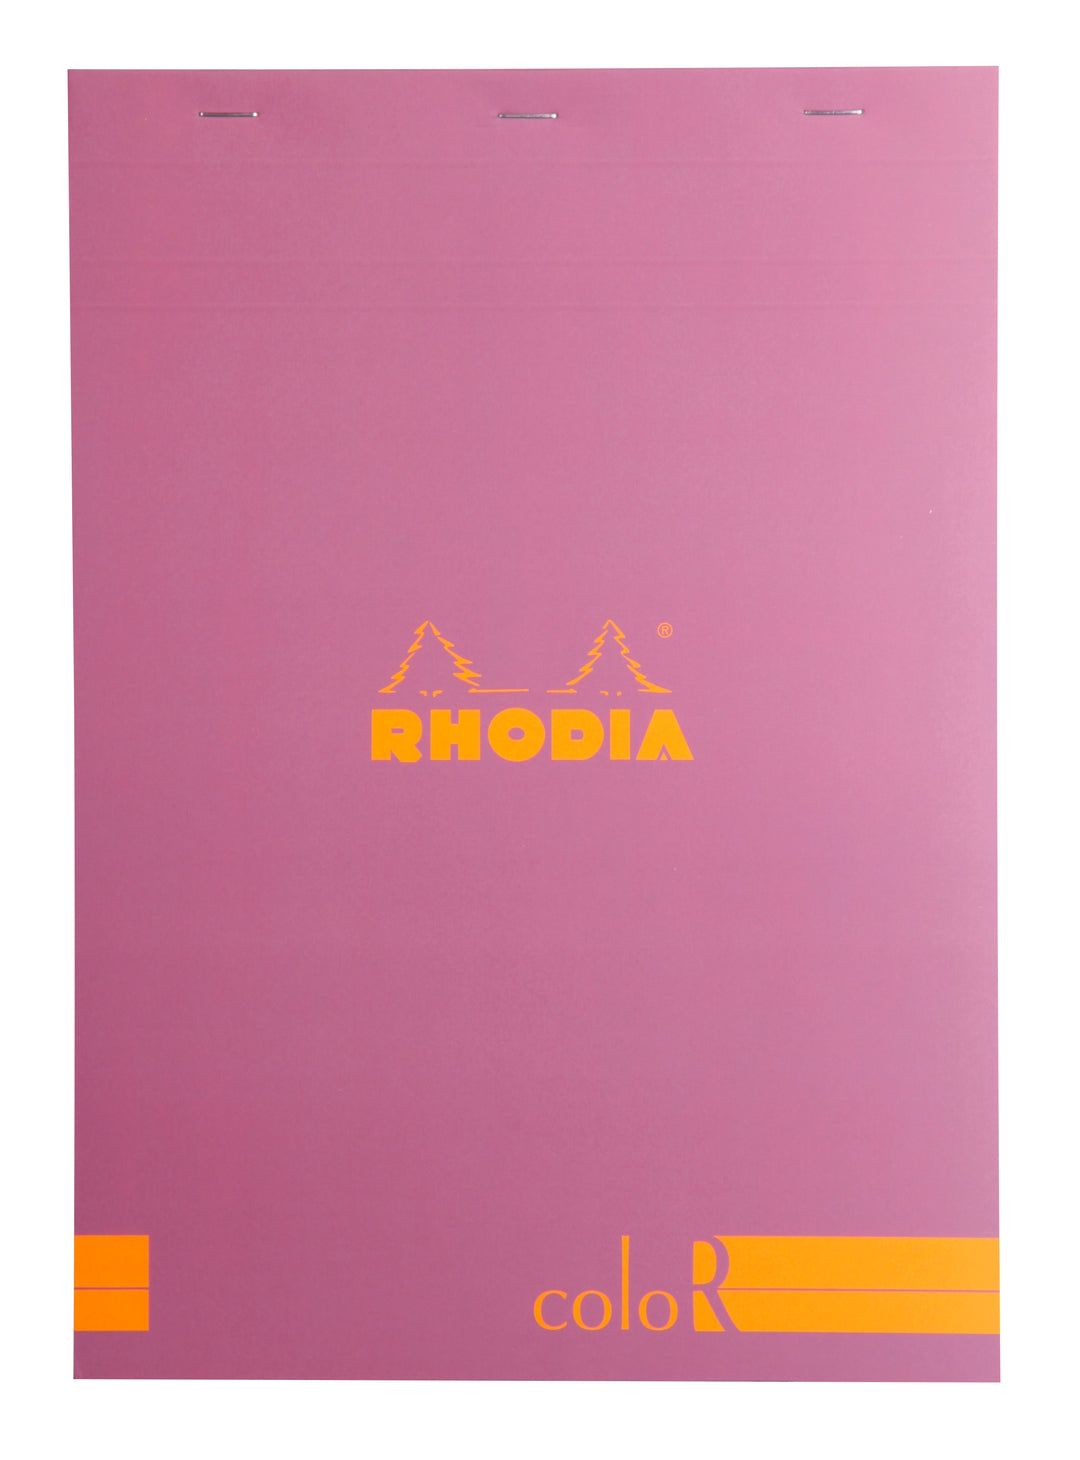 Rhodia Basics coloR Stapled Line Ruled Notepad - A4